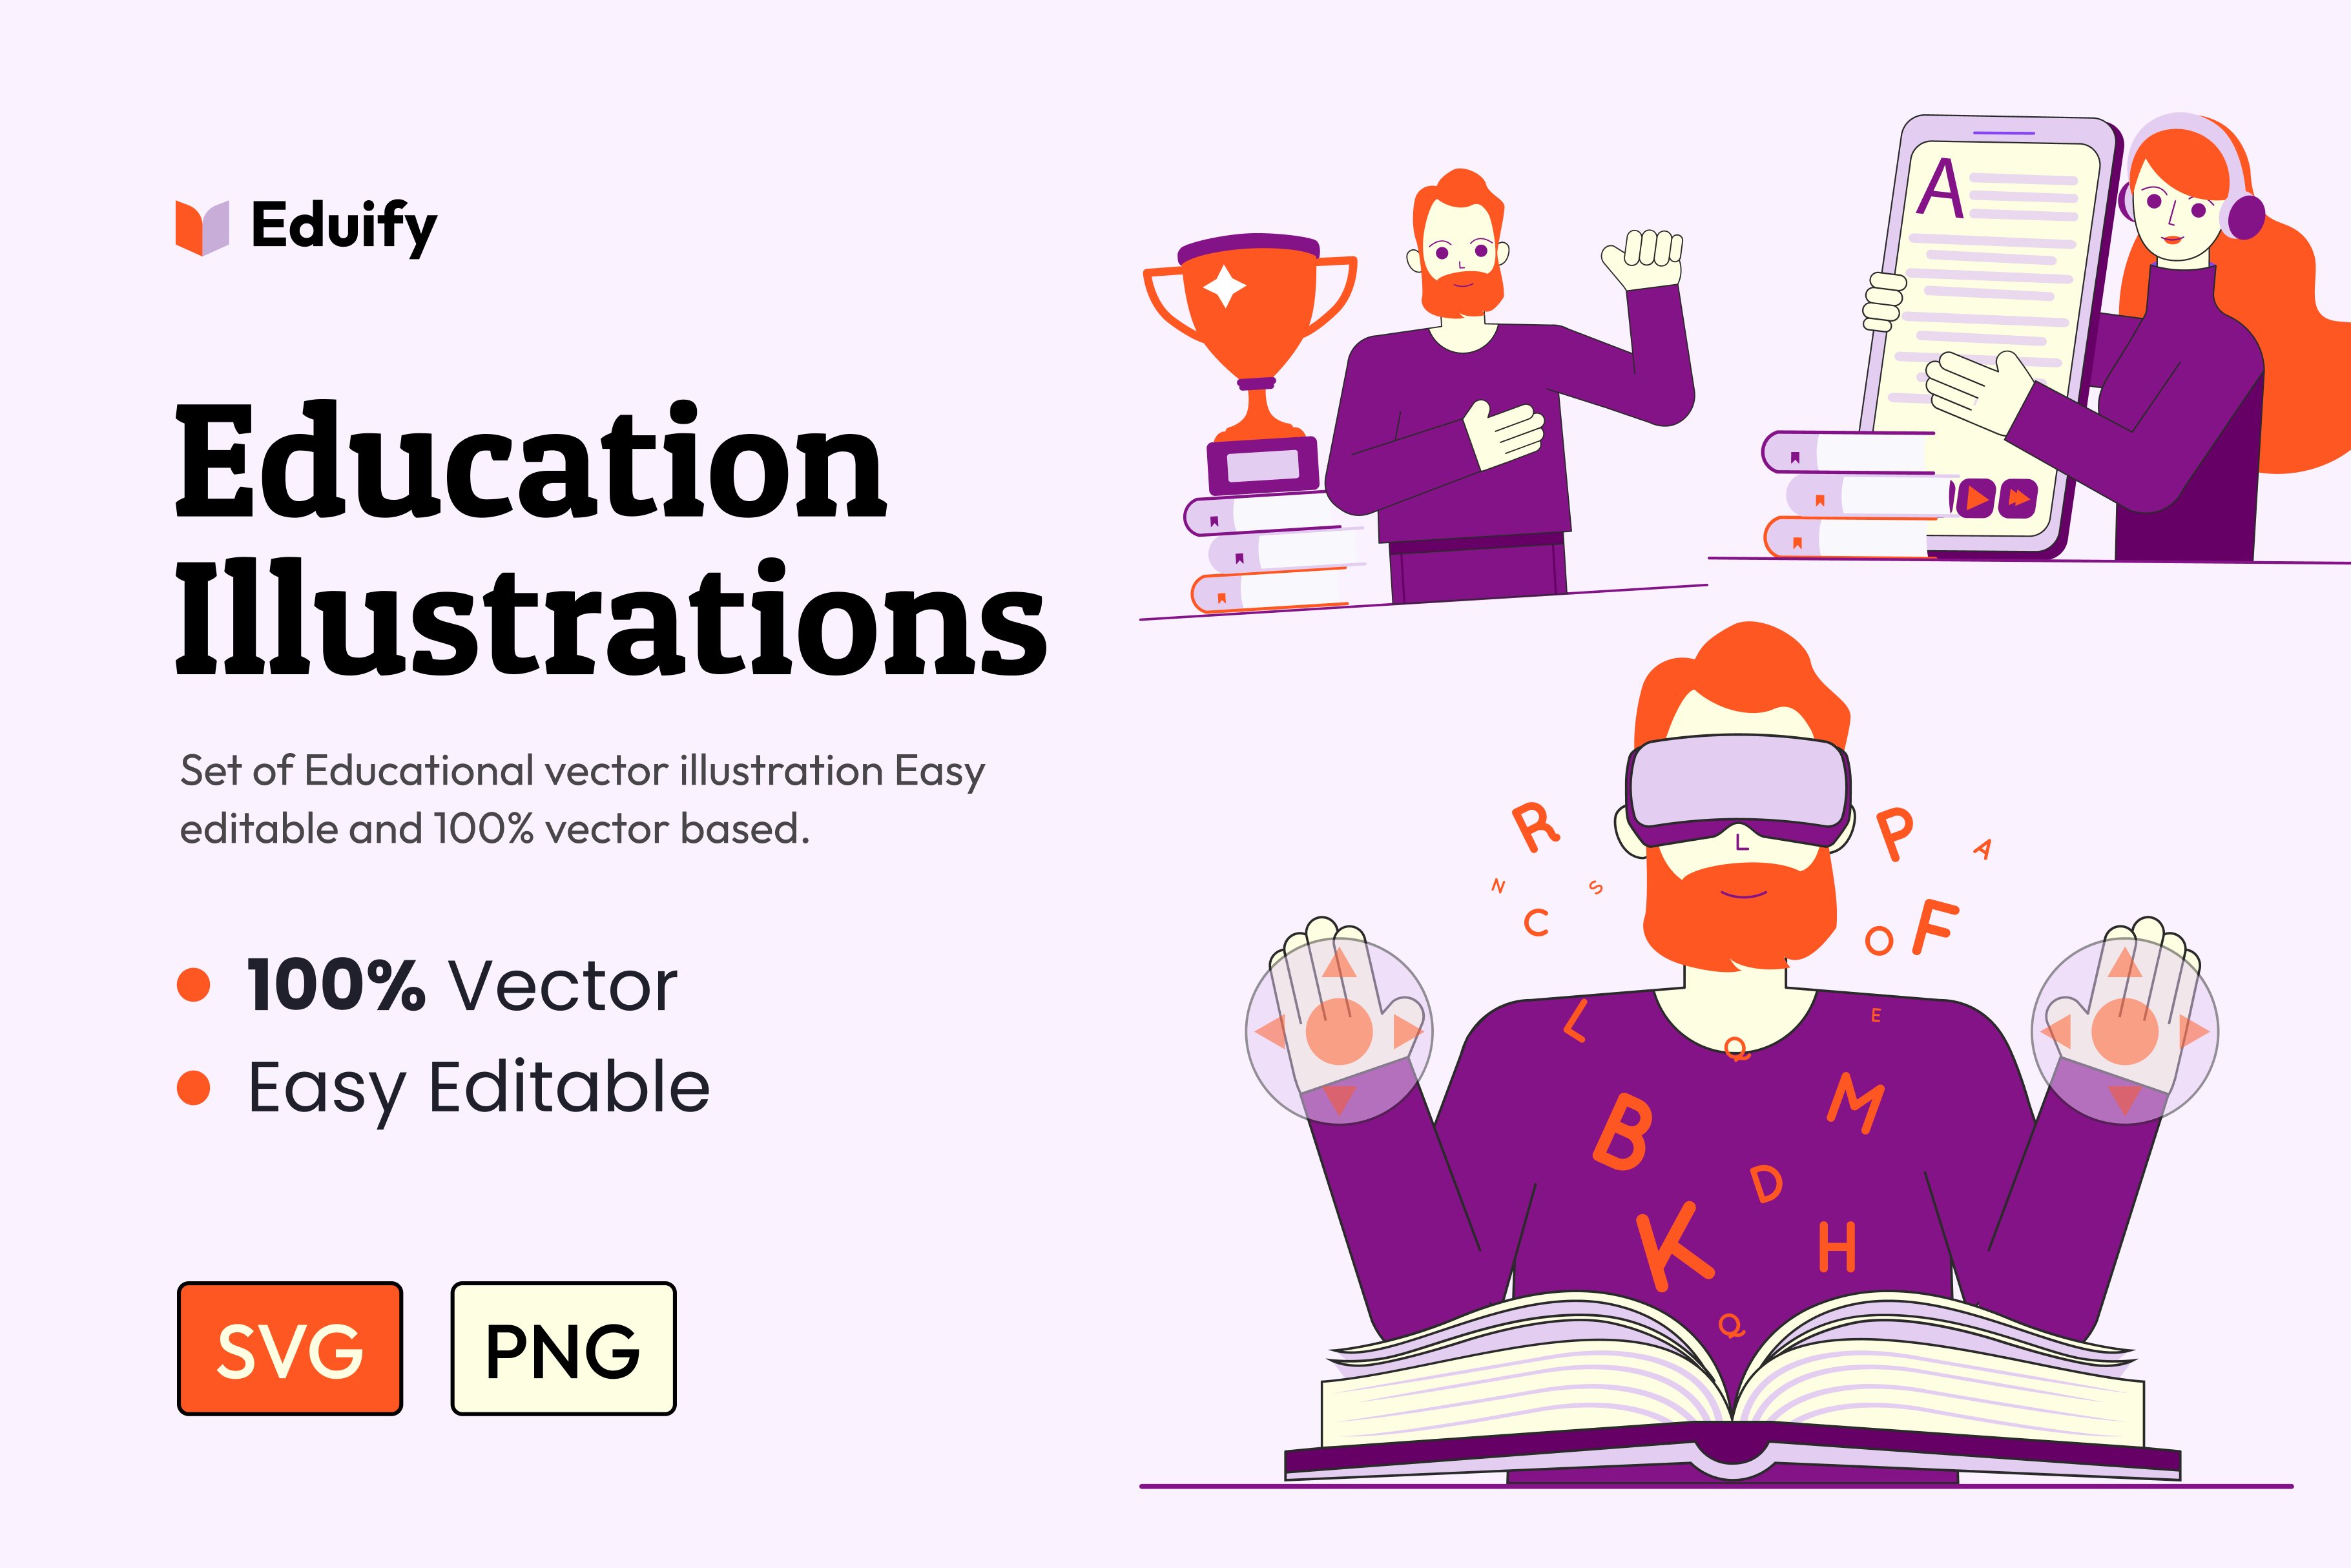 Eduify – 15 Education Illustration cover image.